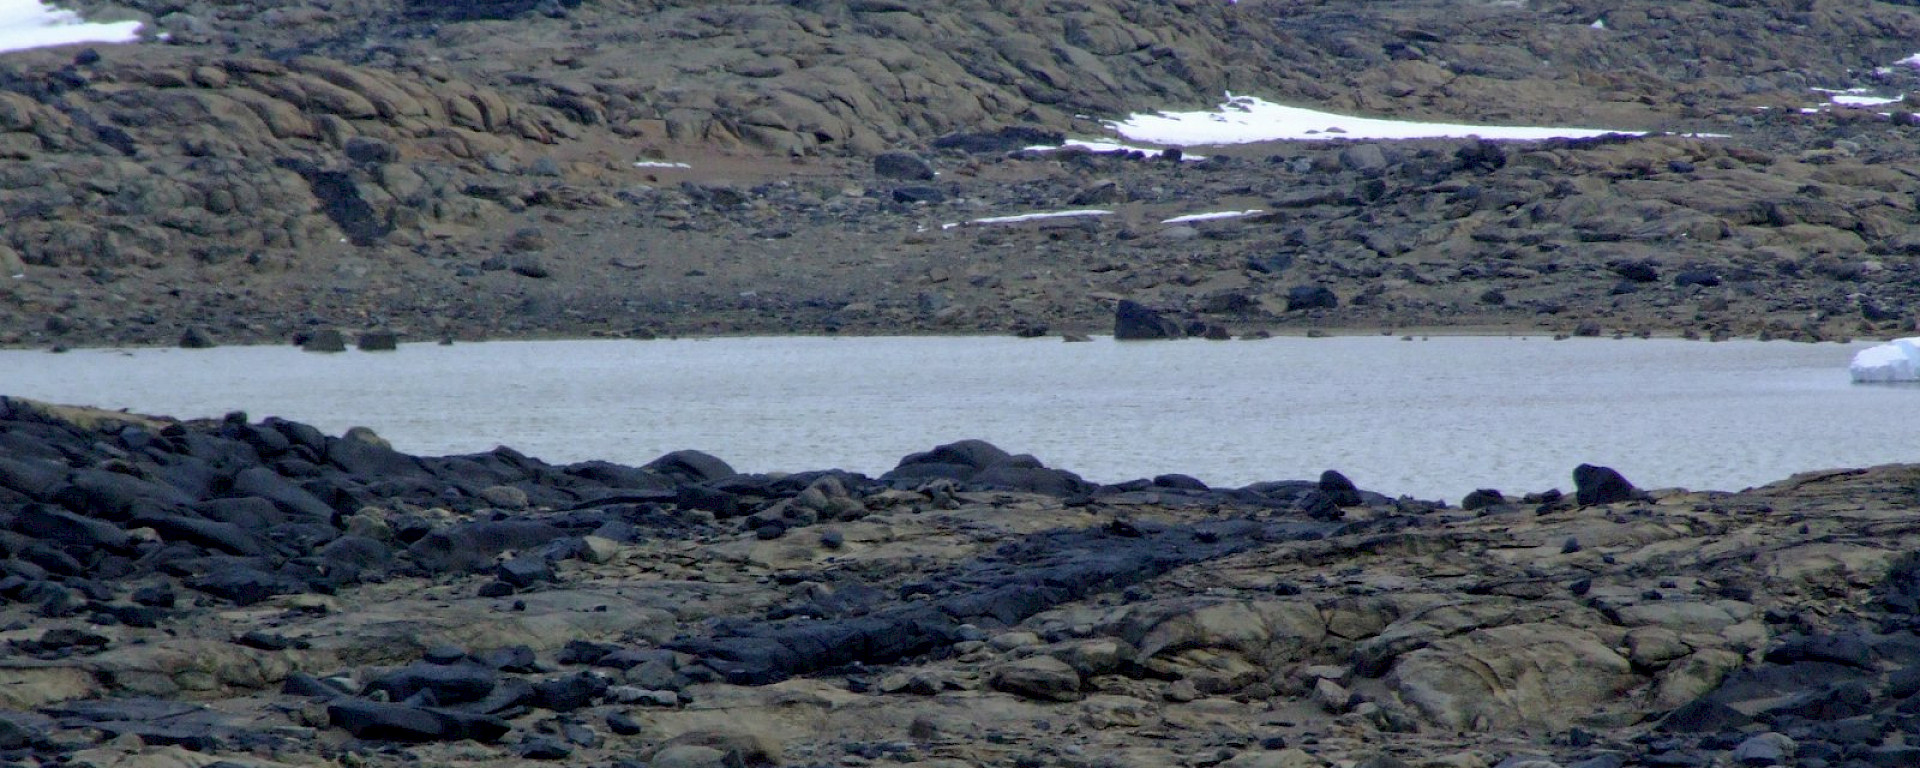 Organic Lake in the Vestfold Hills, East Antarctica.